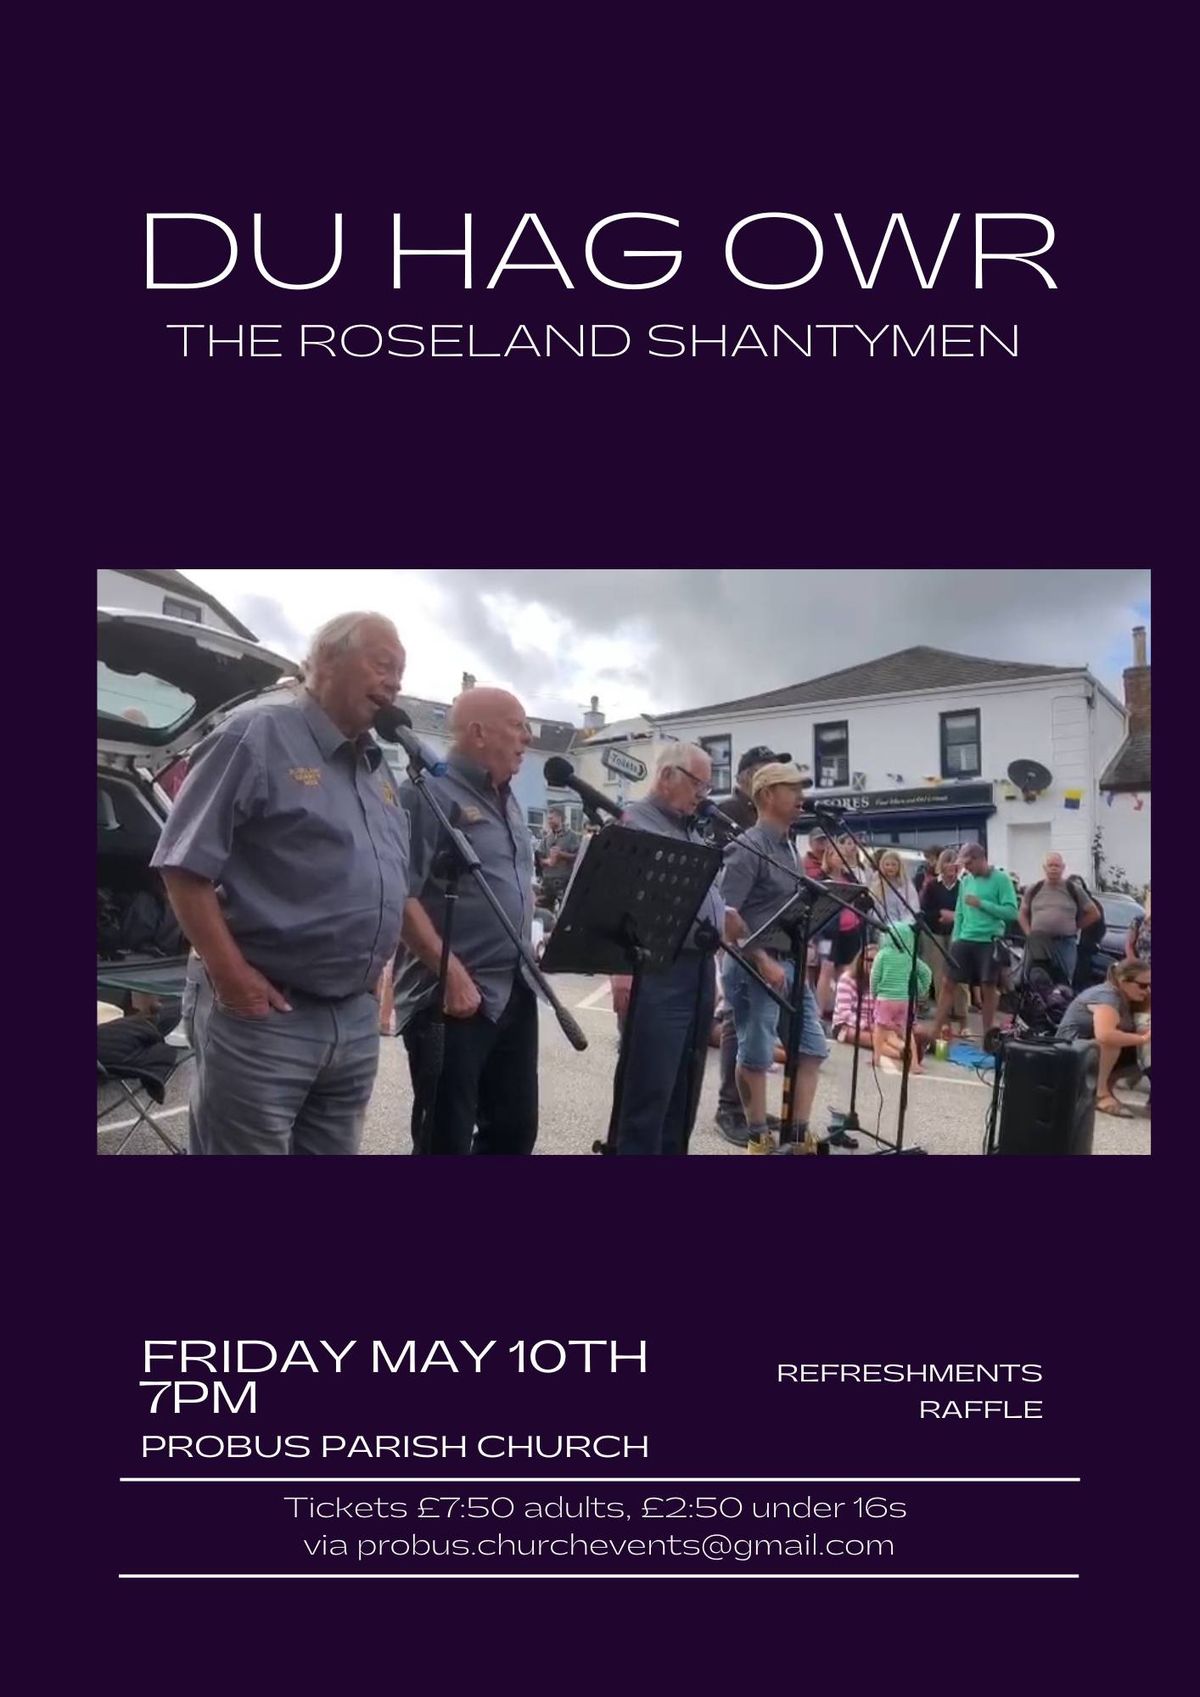 Du Hag Owr - The Roseland Shantymen in concert